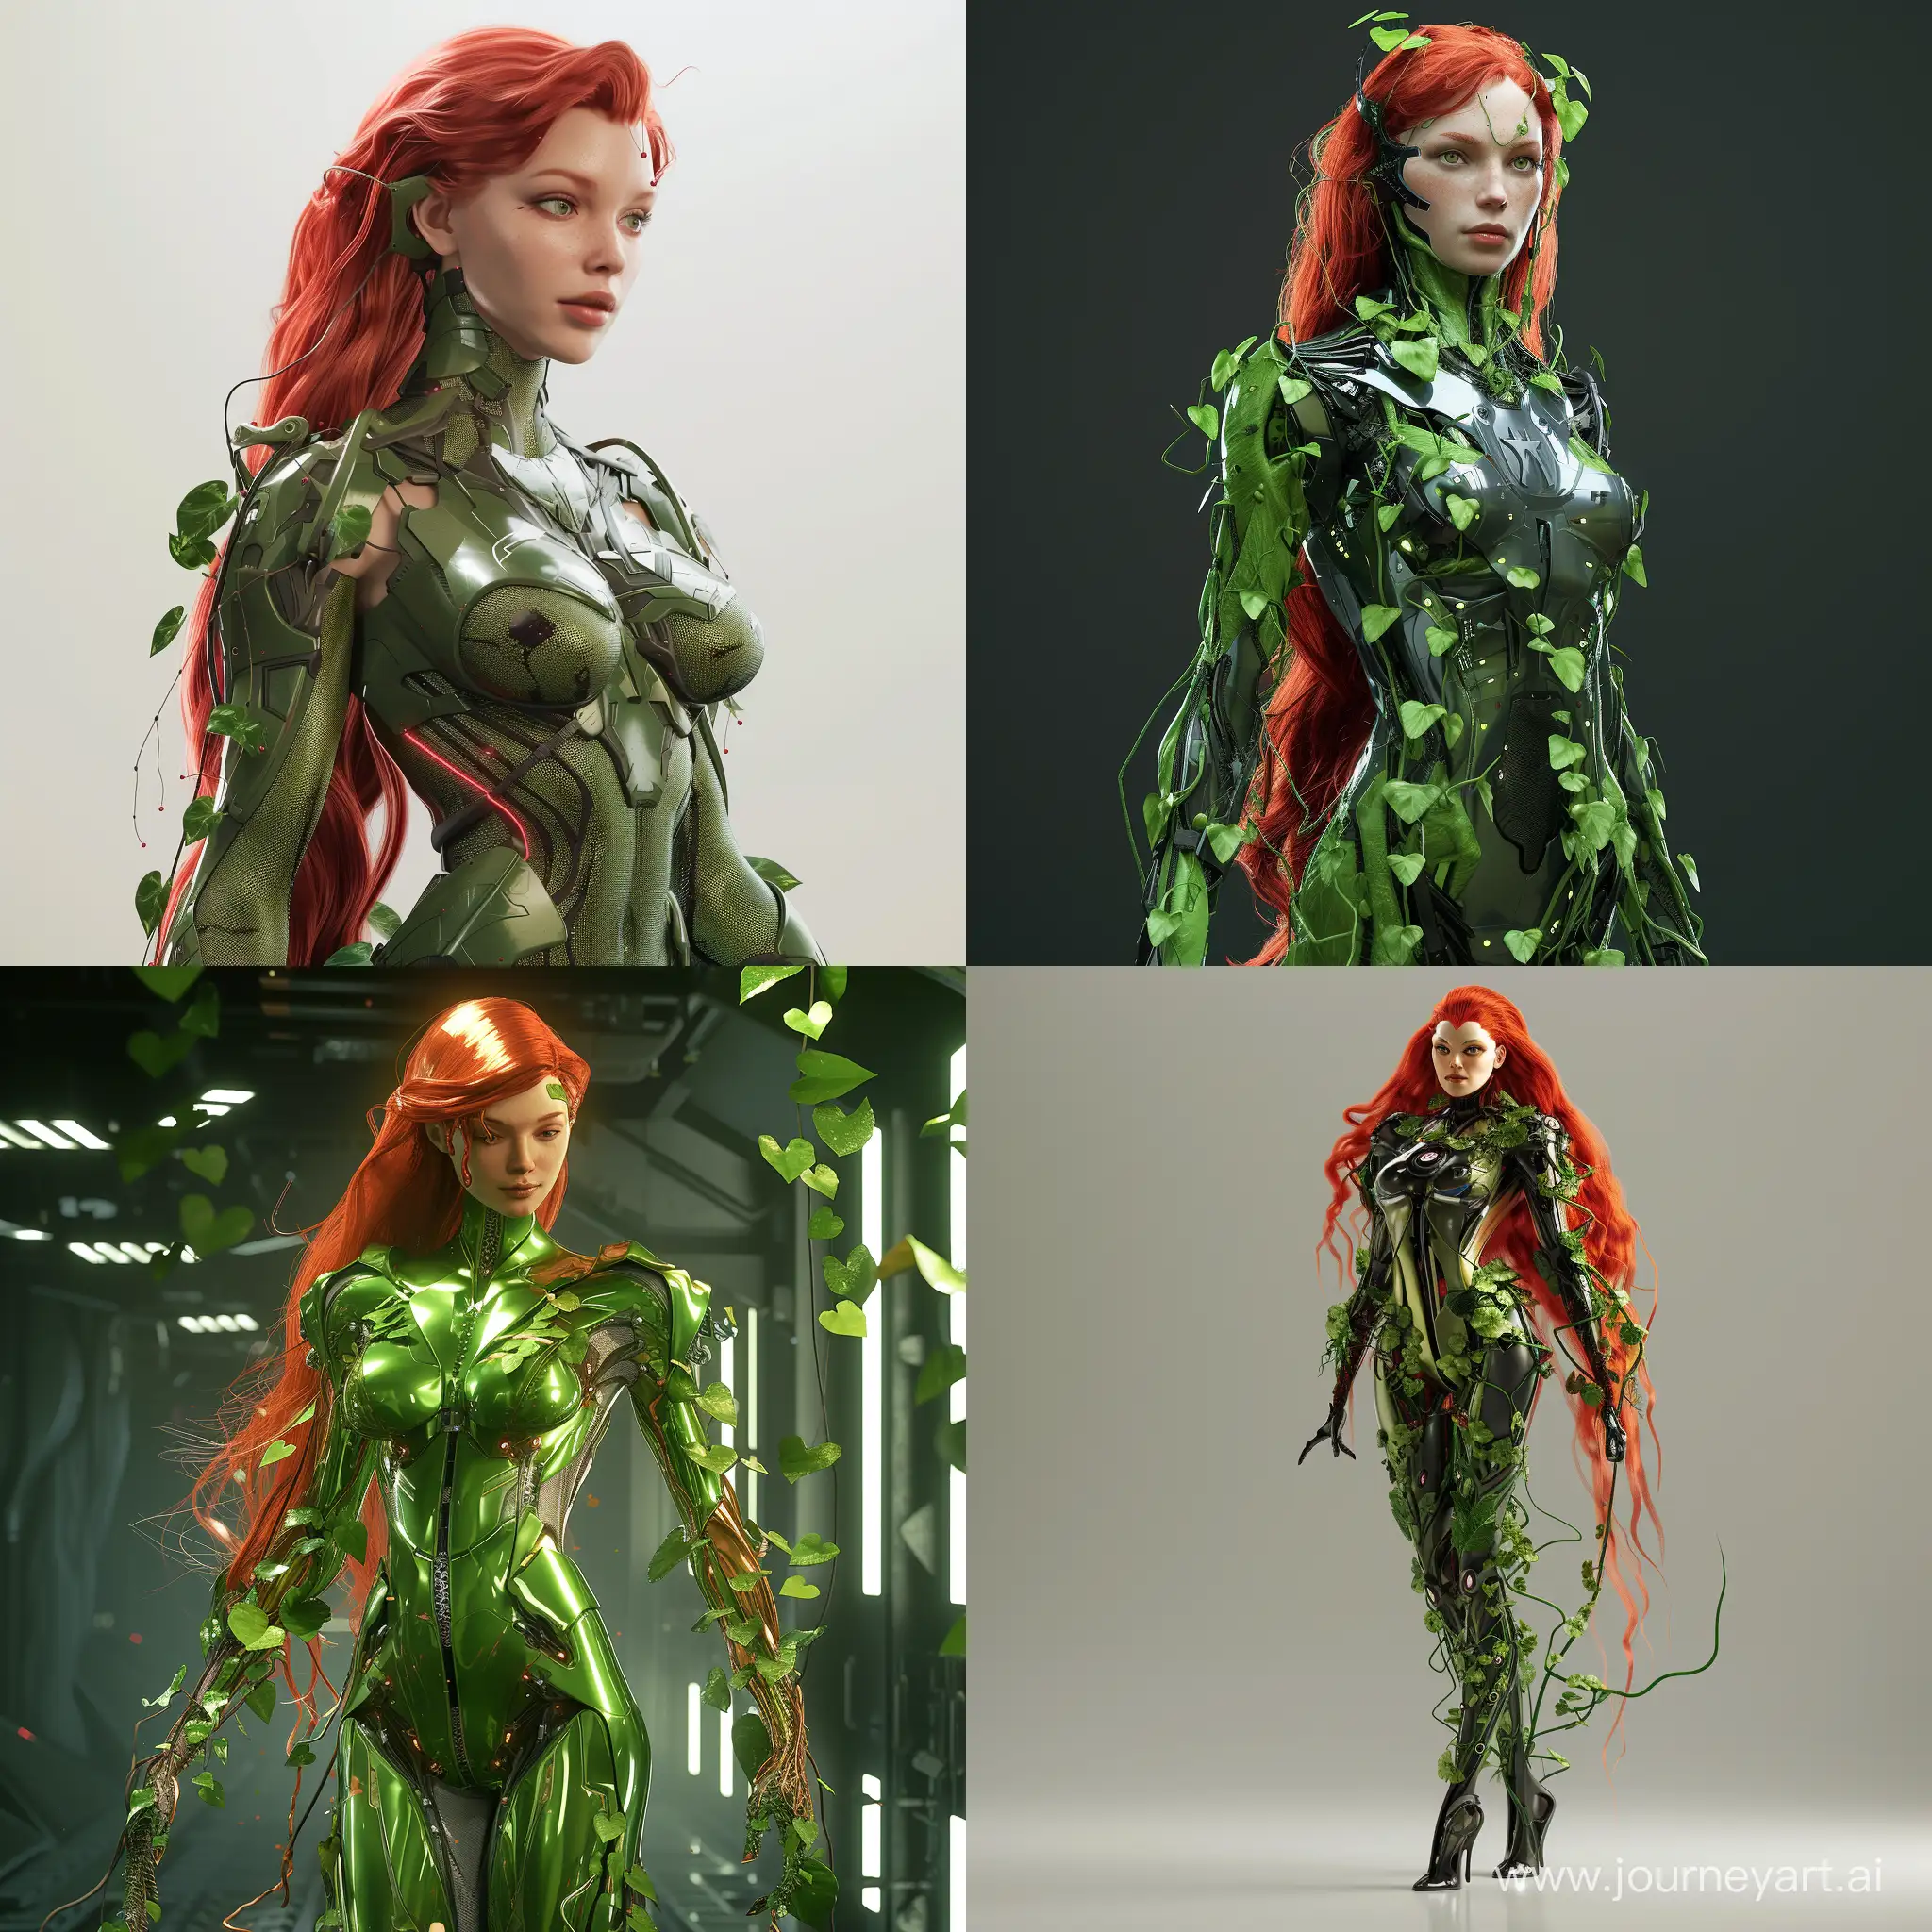 Futuristic-DC-Poison-Ivy-in-HighTech-World